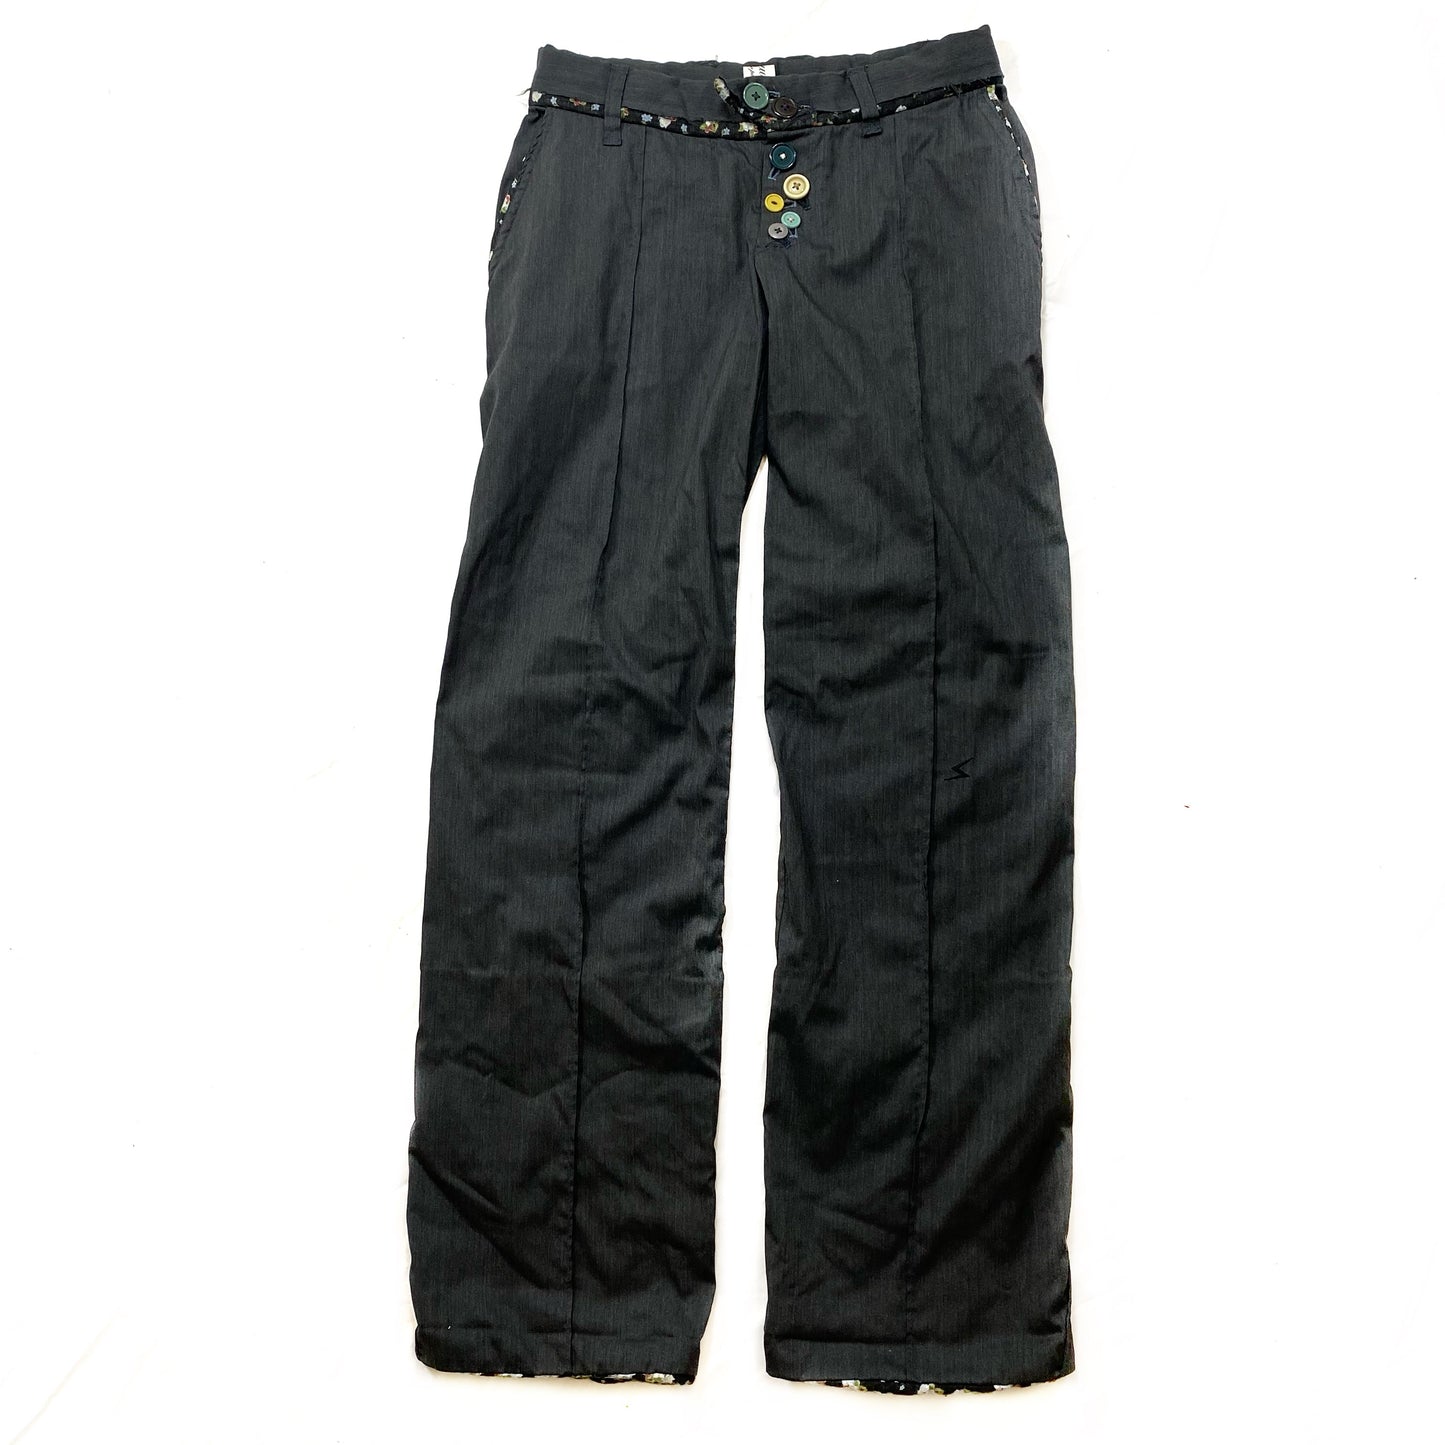 Undercover rebuild trousers A/W04 “But Beautiful” 26